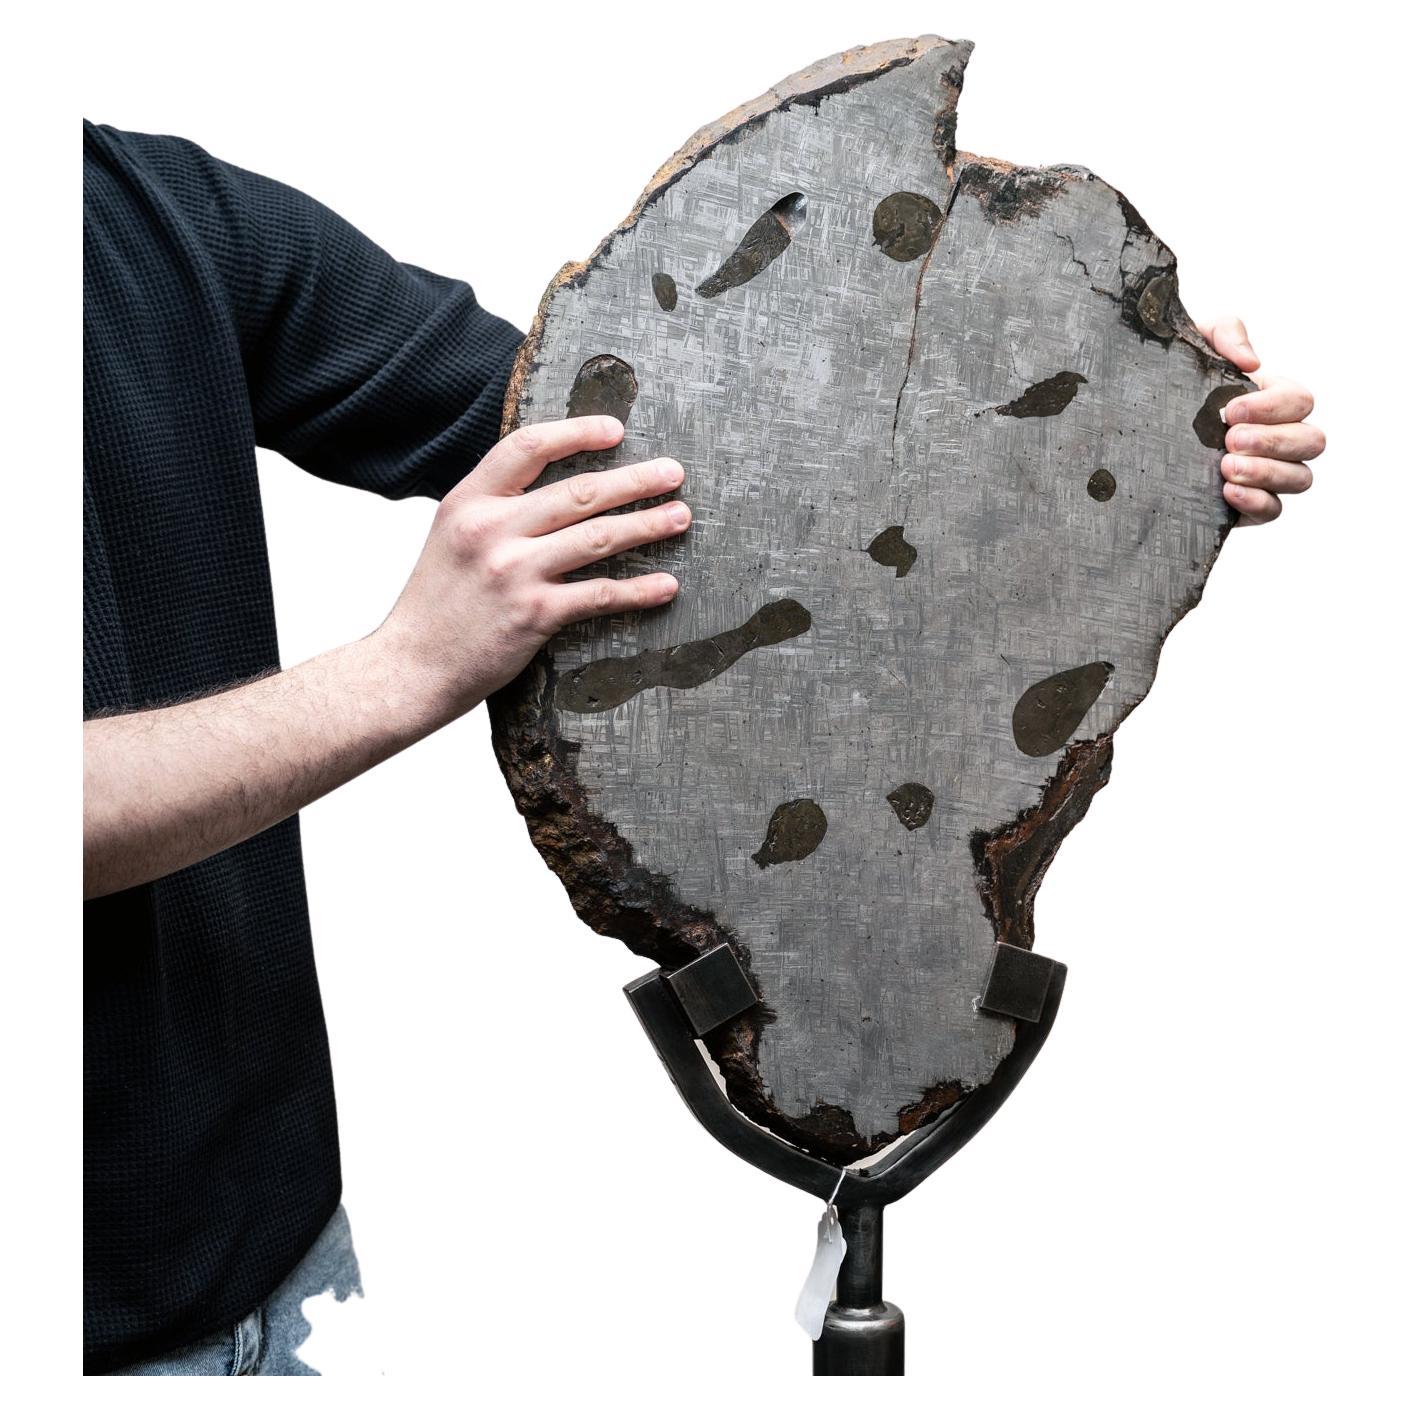 Giant Muonionalusta Meteorite '86 lbs' on Custom Metal Stand